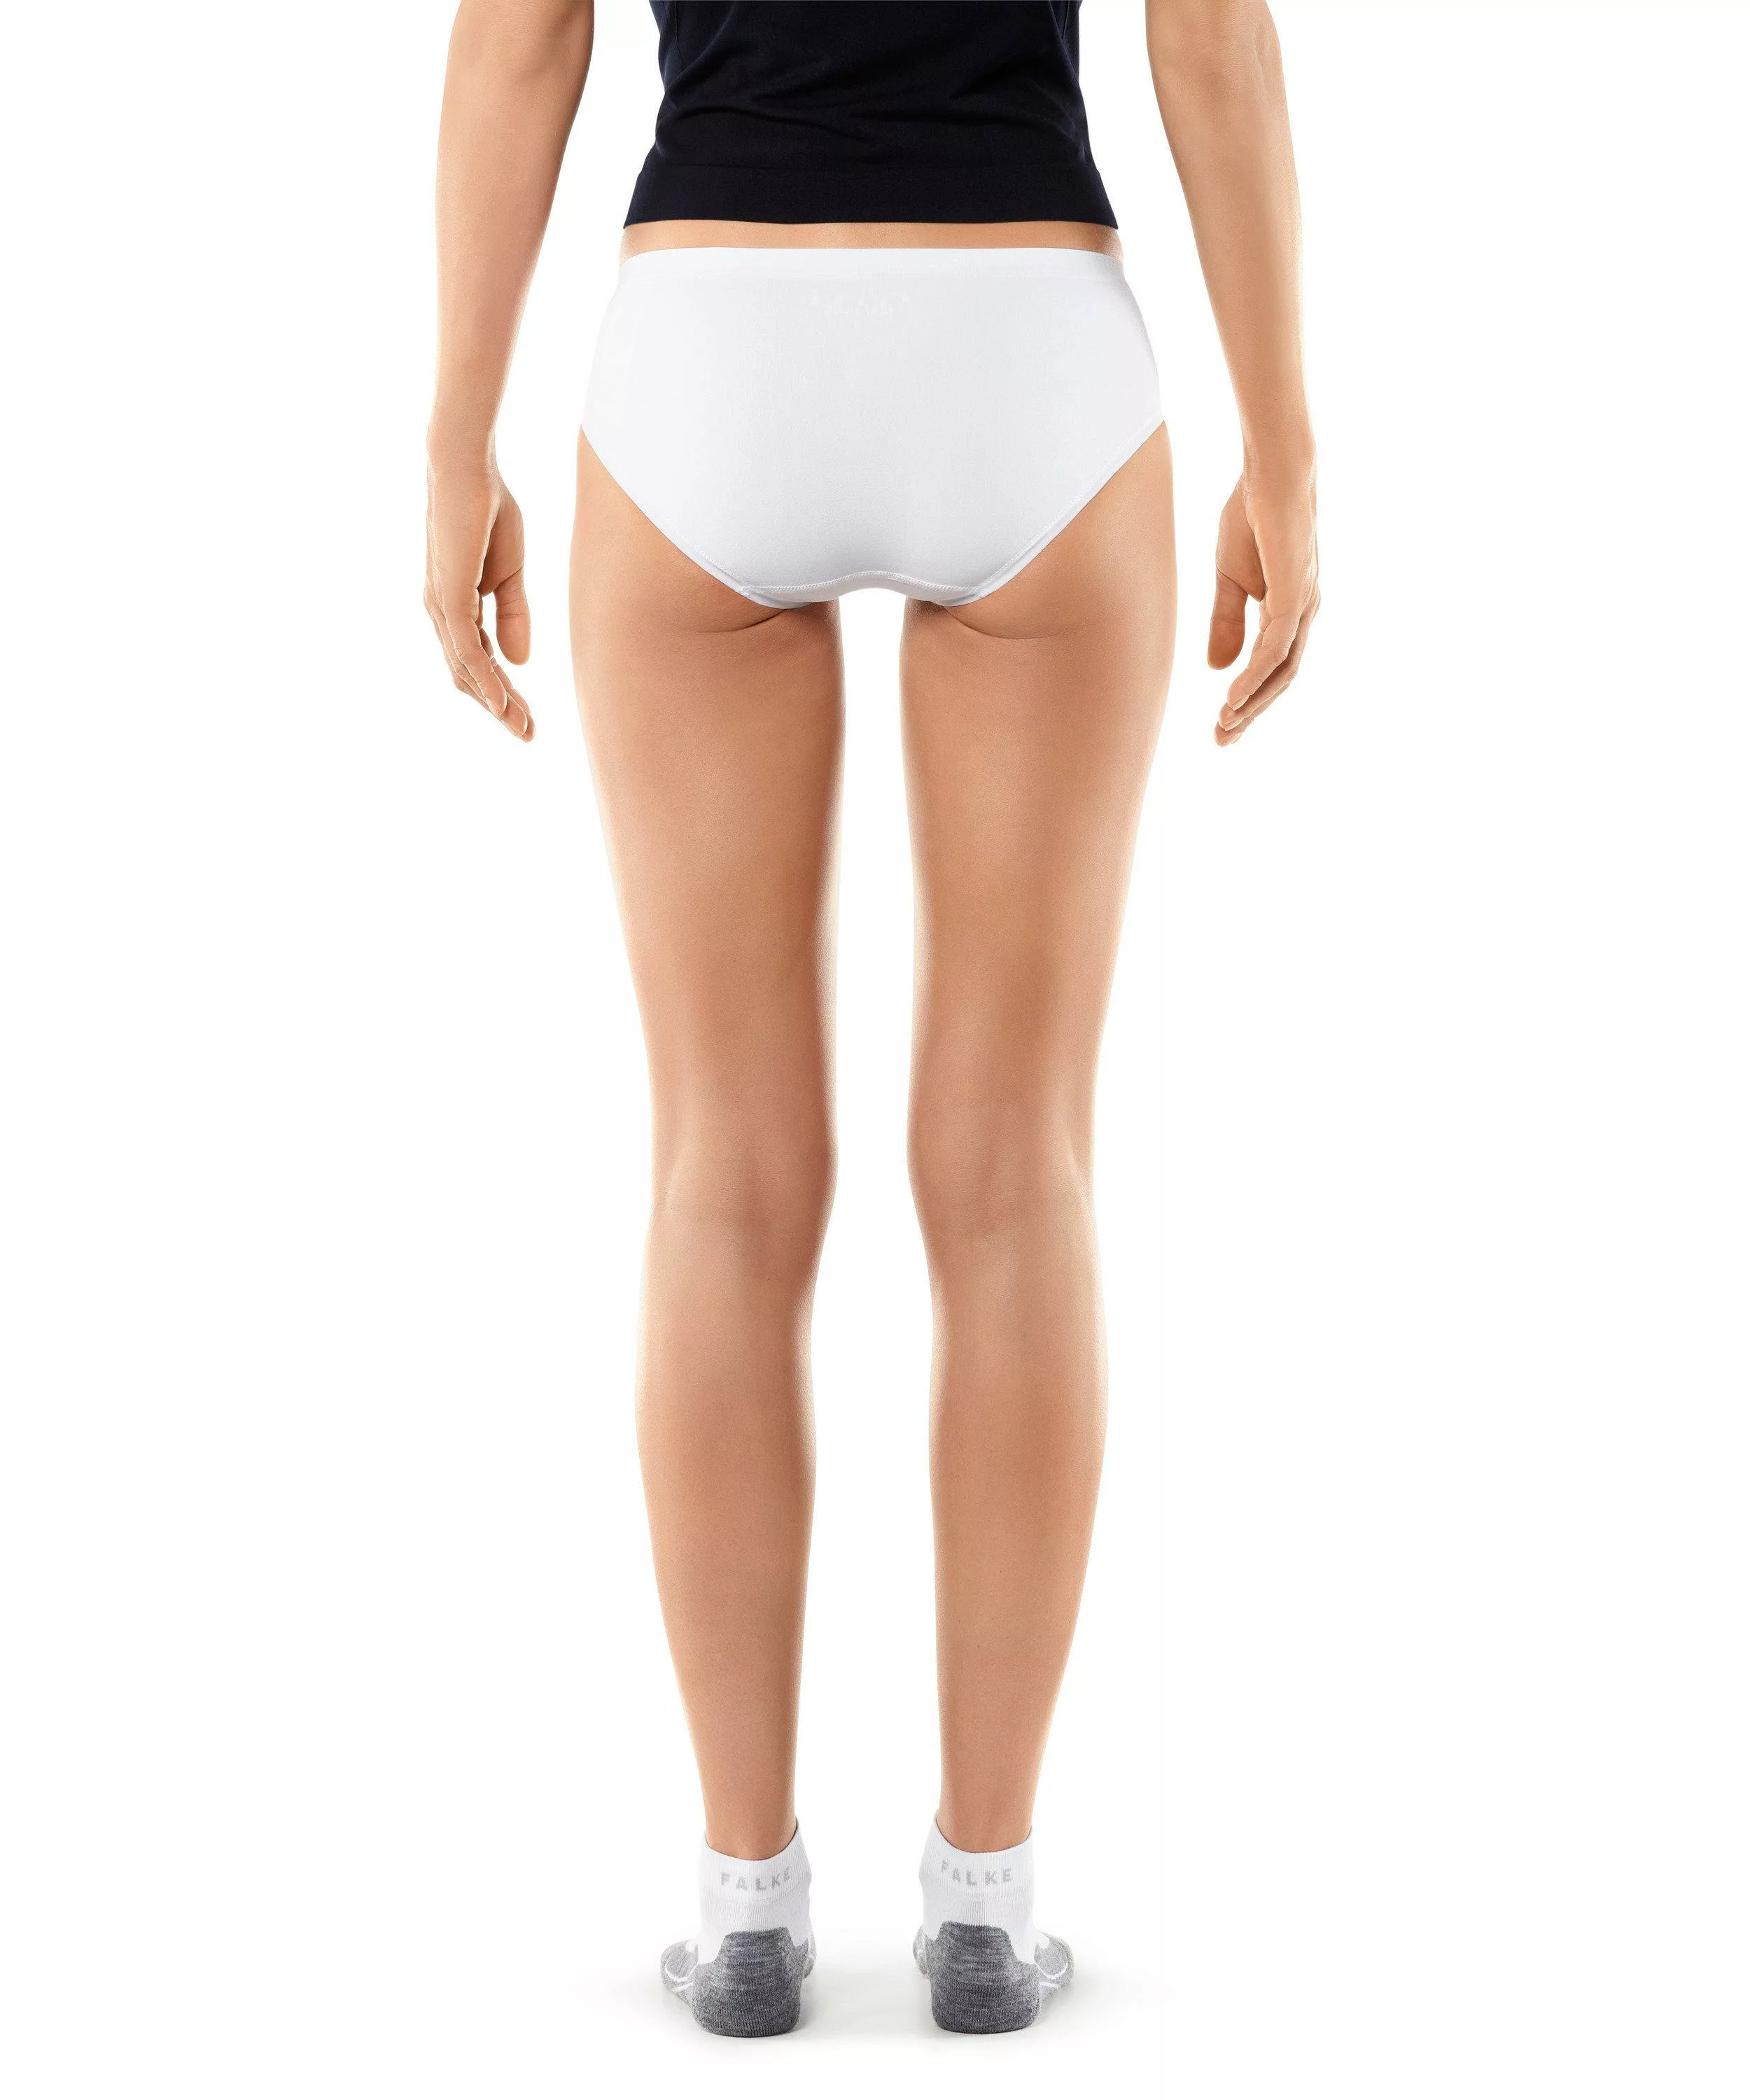 FALKE Damen Panties Cool, S, Weiß, Uni, 33245-286002 günstig online kaufen